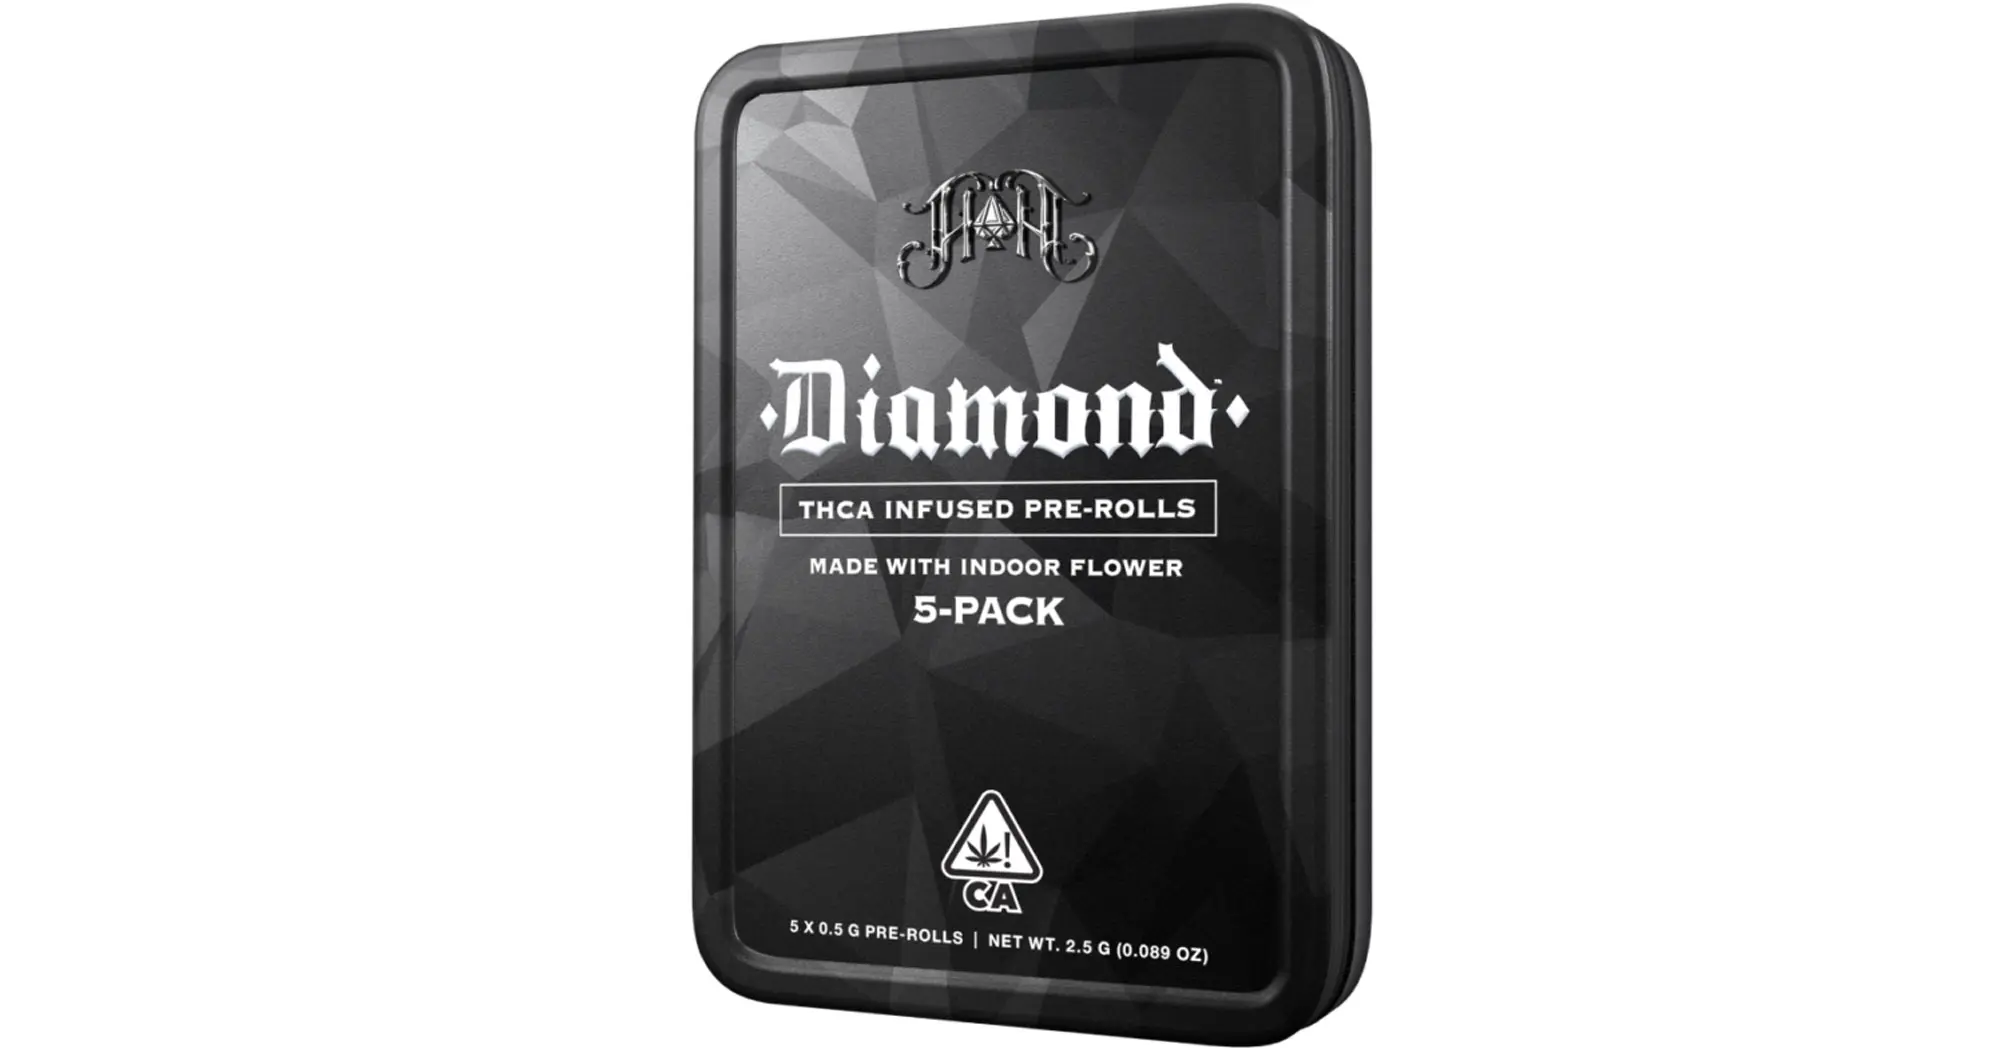 Spritzer Diamond Infused Pre-Rolls